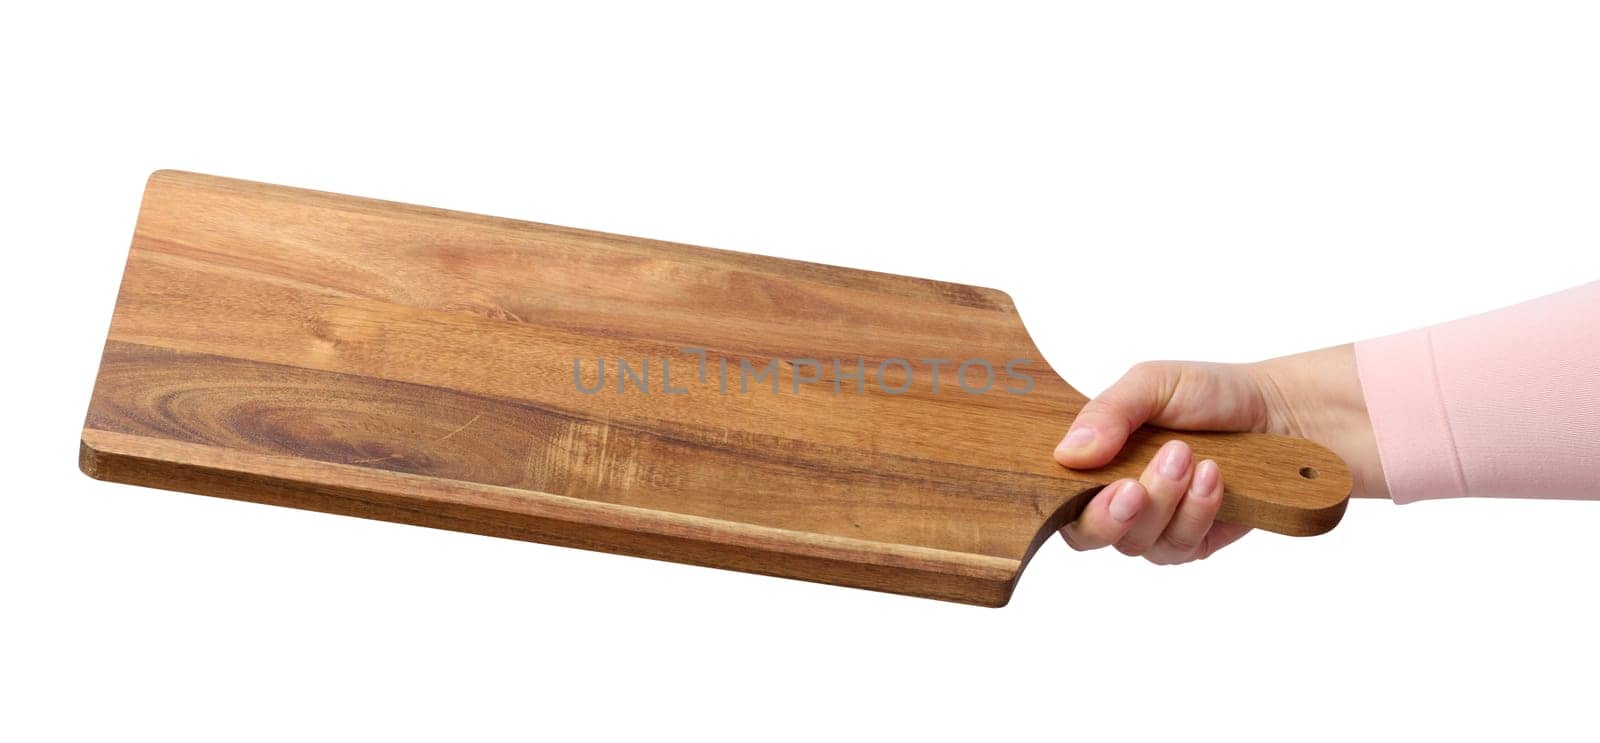 Female hand holding a rectangular wooden cutting board kitchen board by ndanko